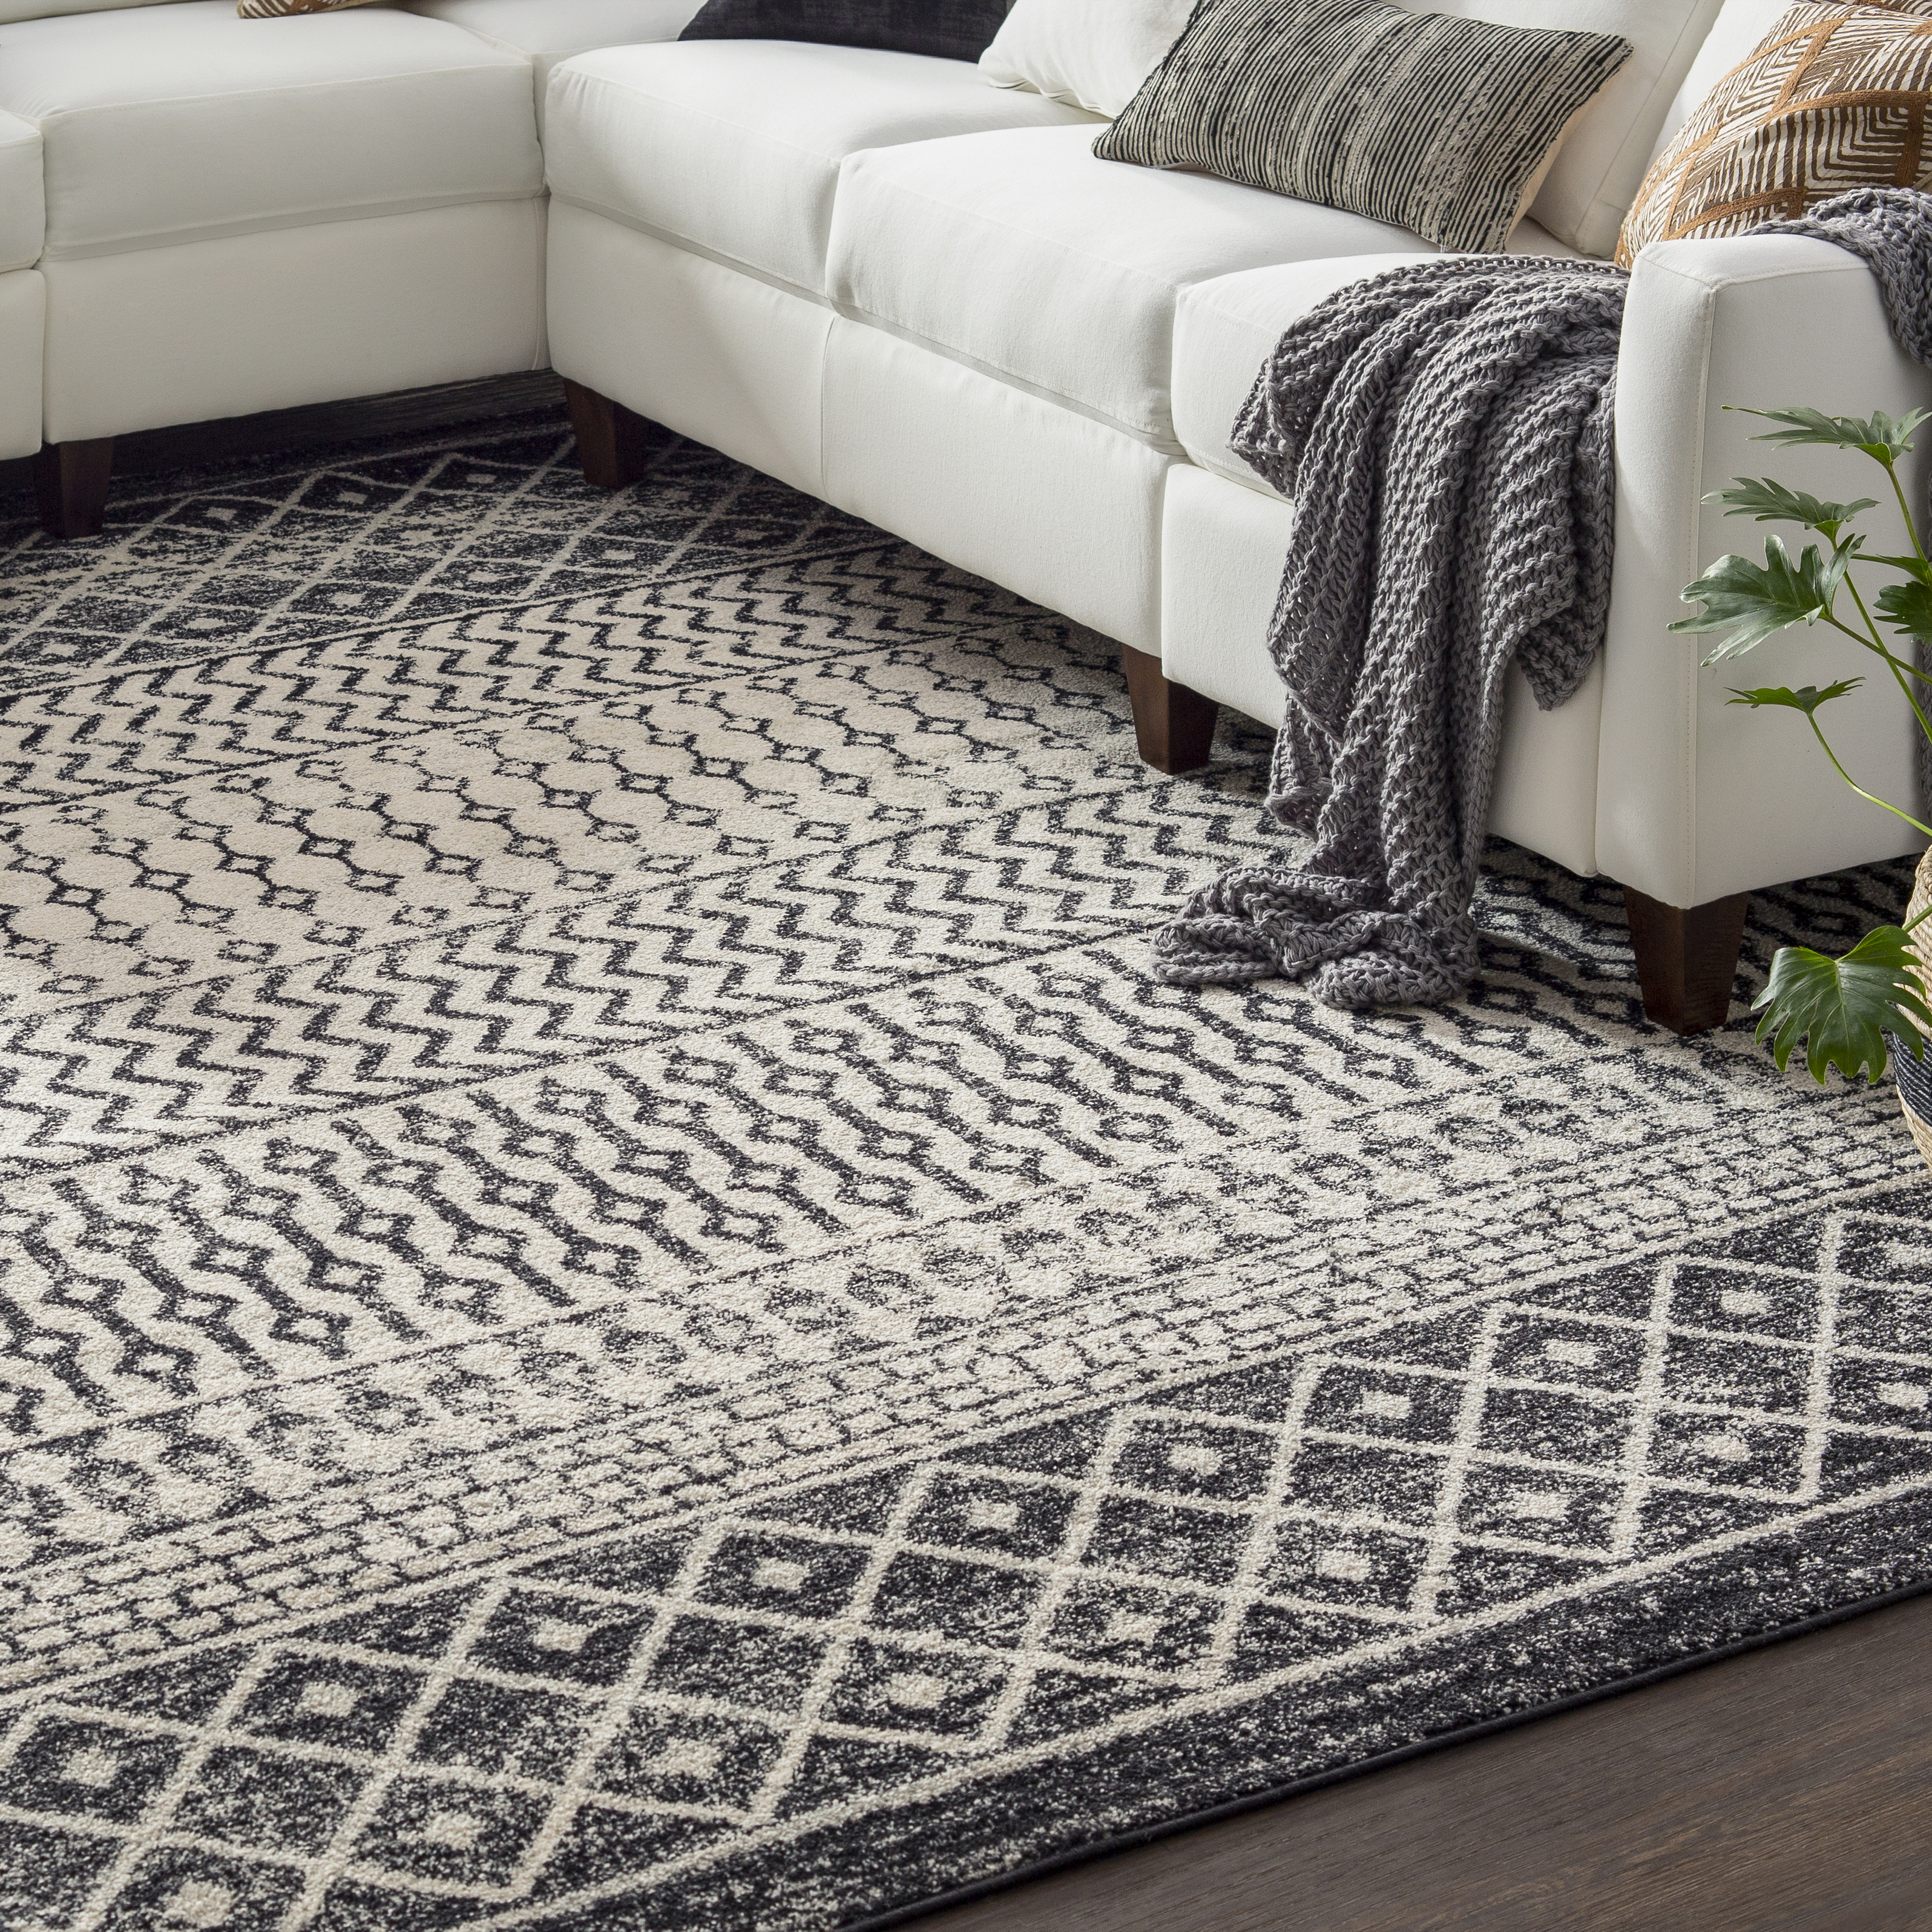 New Design Extra Large Geometric Area Rug Modern Carpet Living Room Bedroom Mat 